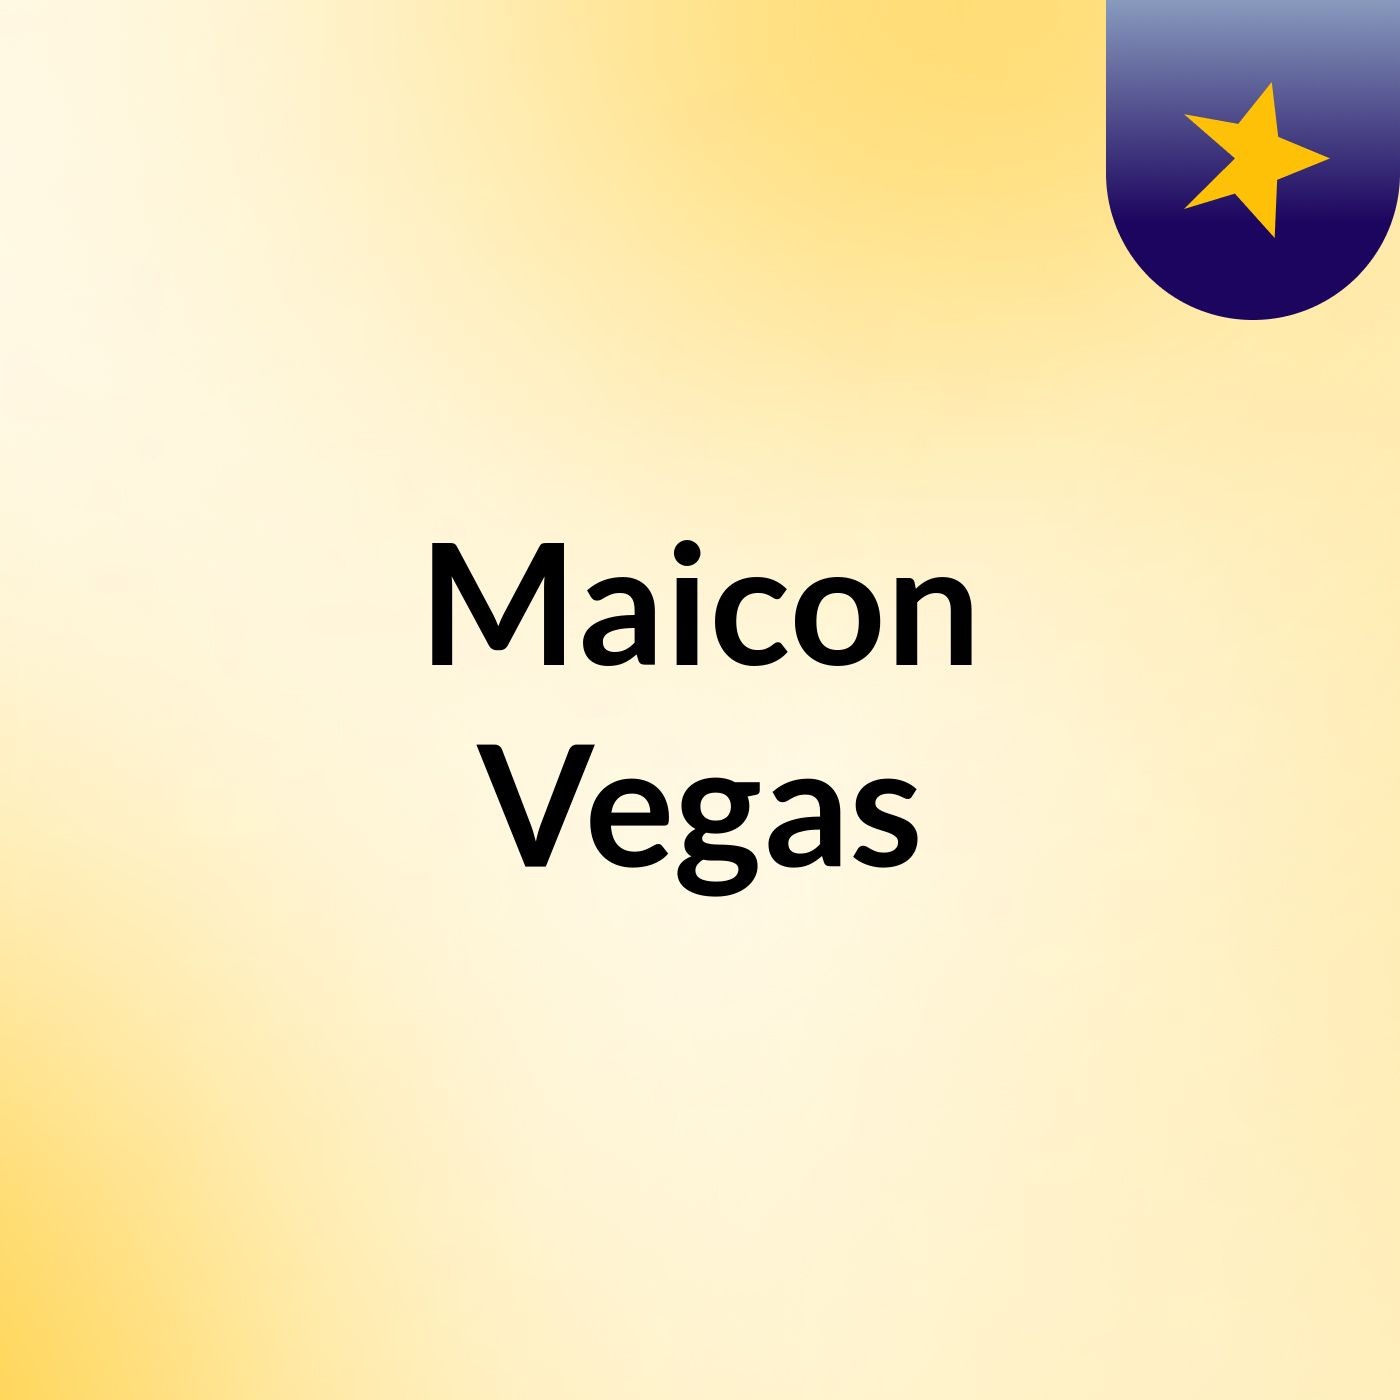 Maicon Vegas